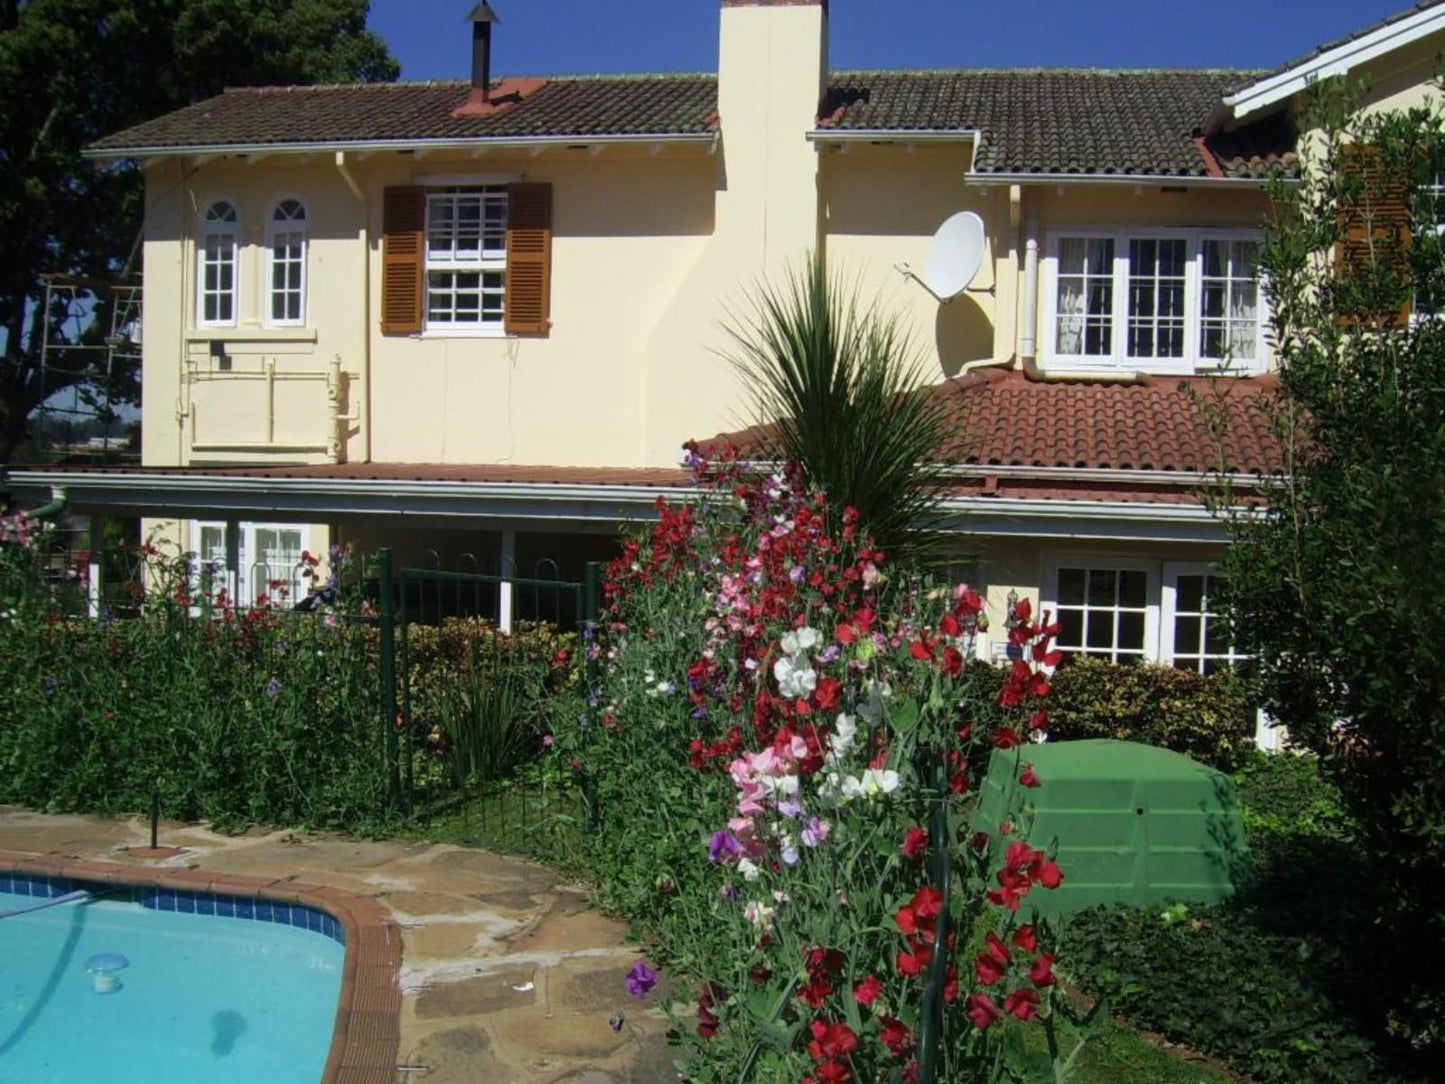 Nutmeg Bandb Howick Kwazulu Natal South Africa House, Building, Architecture, Garden, Nature, Plant, Swimming Pool